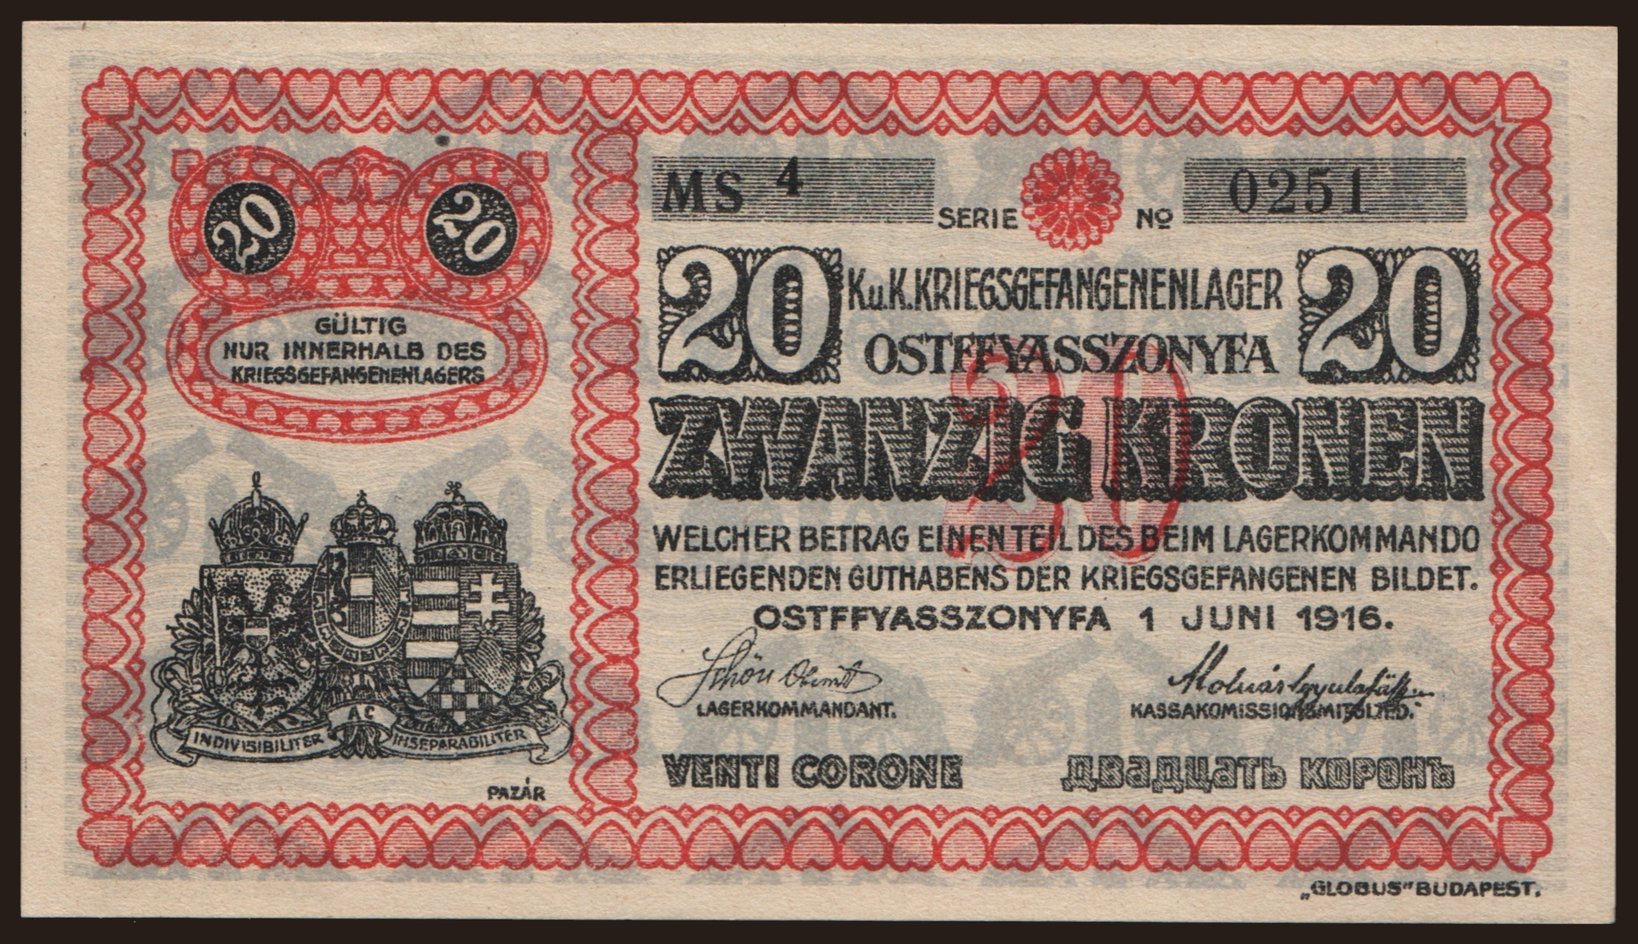 Ostffyasszonyfa, 20 Kronen, 1916